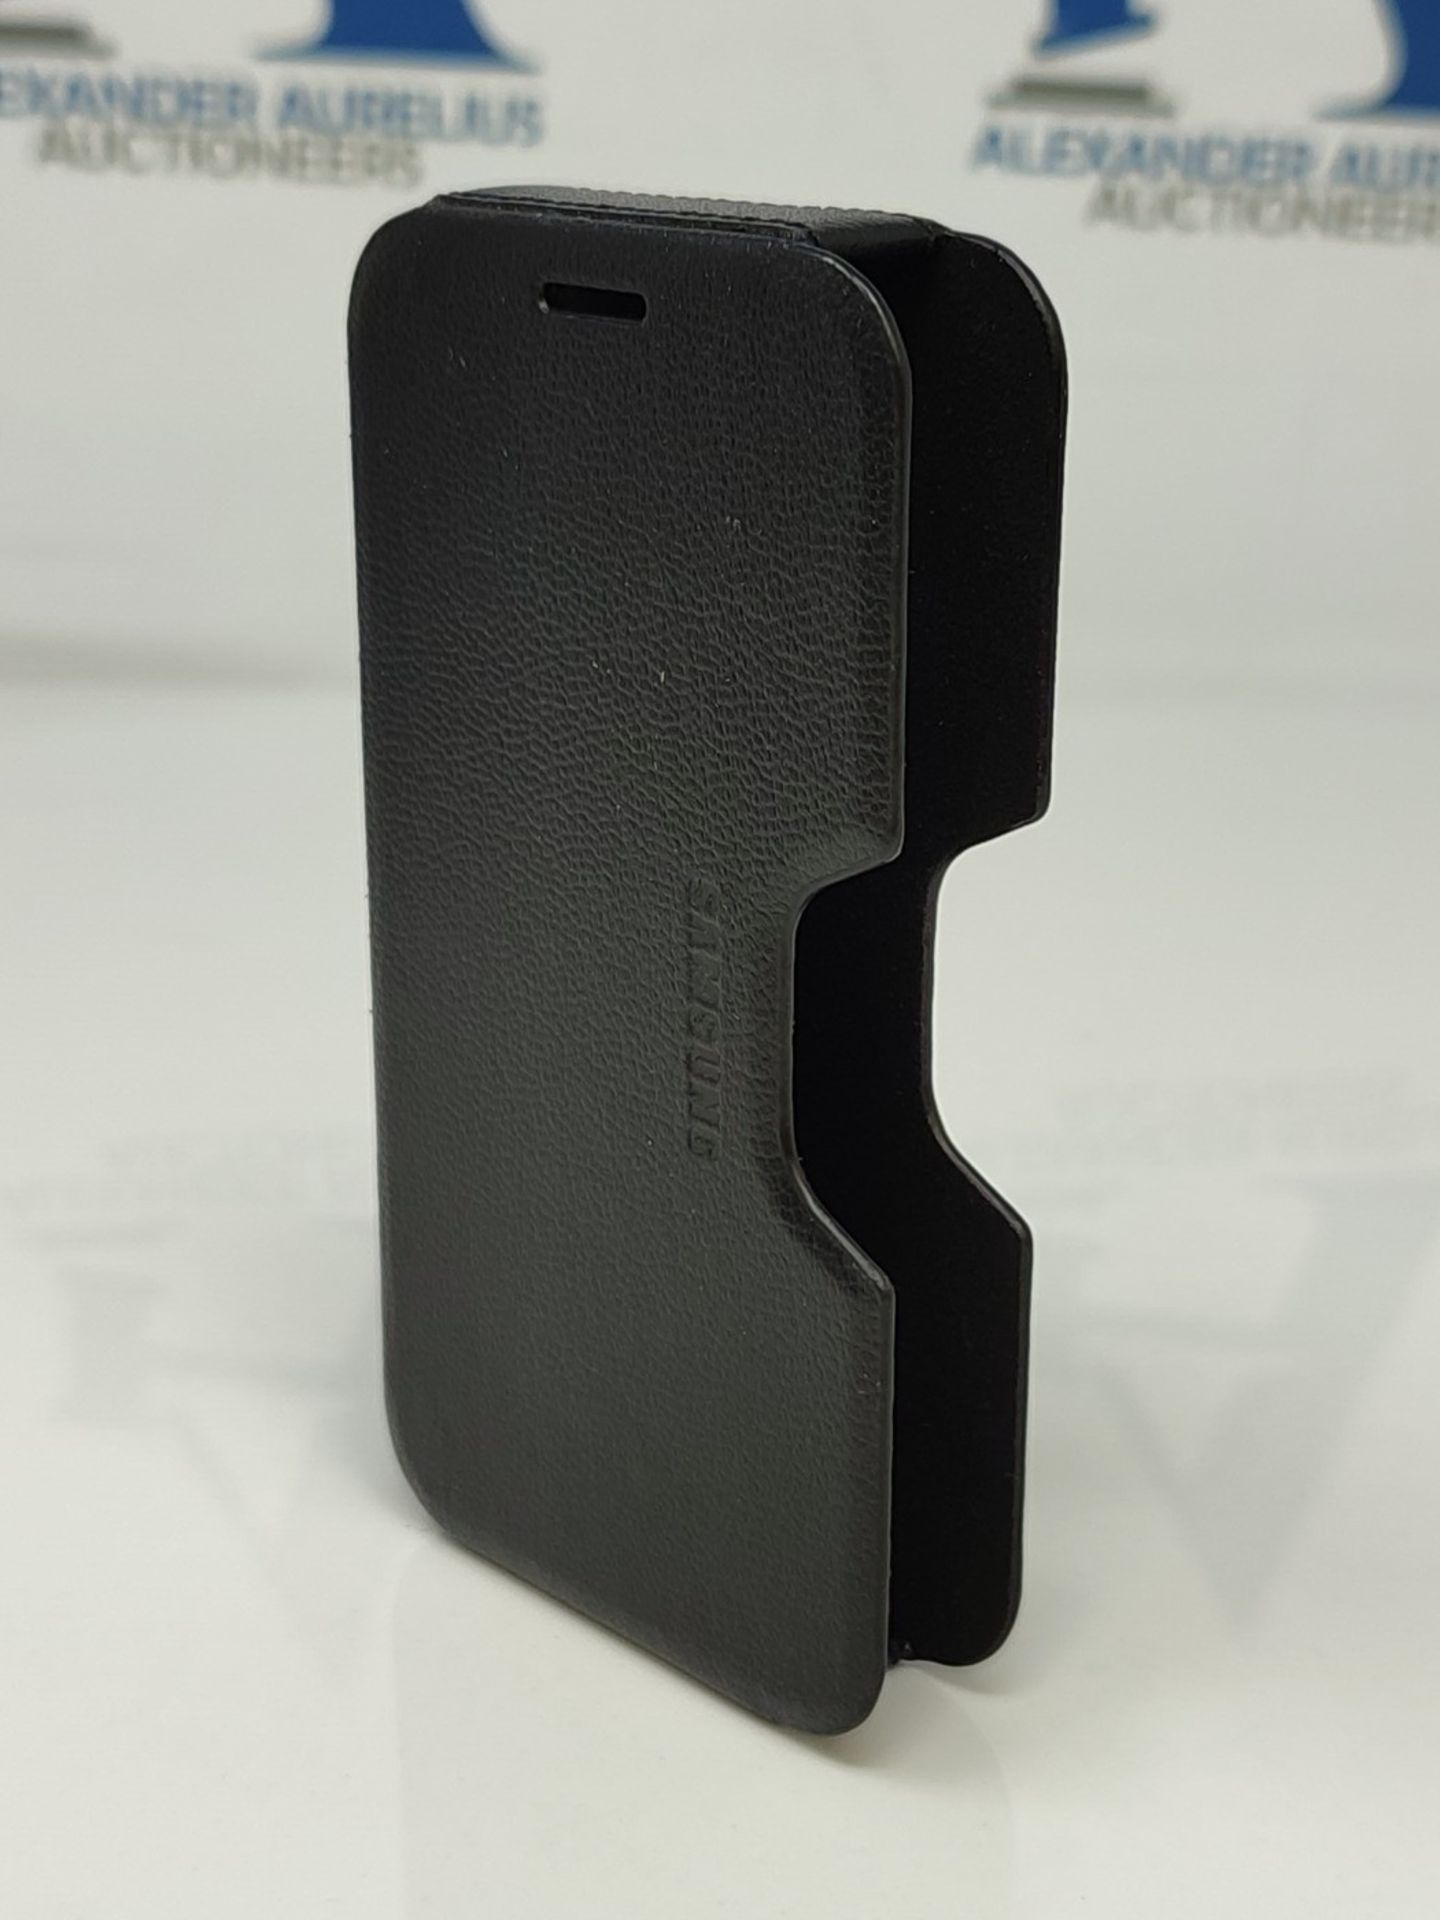 Samsung SAFUN01 - Leather case for Samsung mobile phones, black color - Image 3 of 3